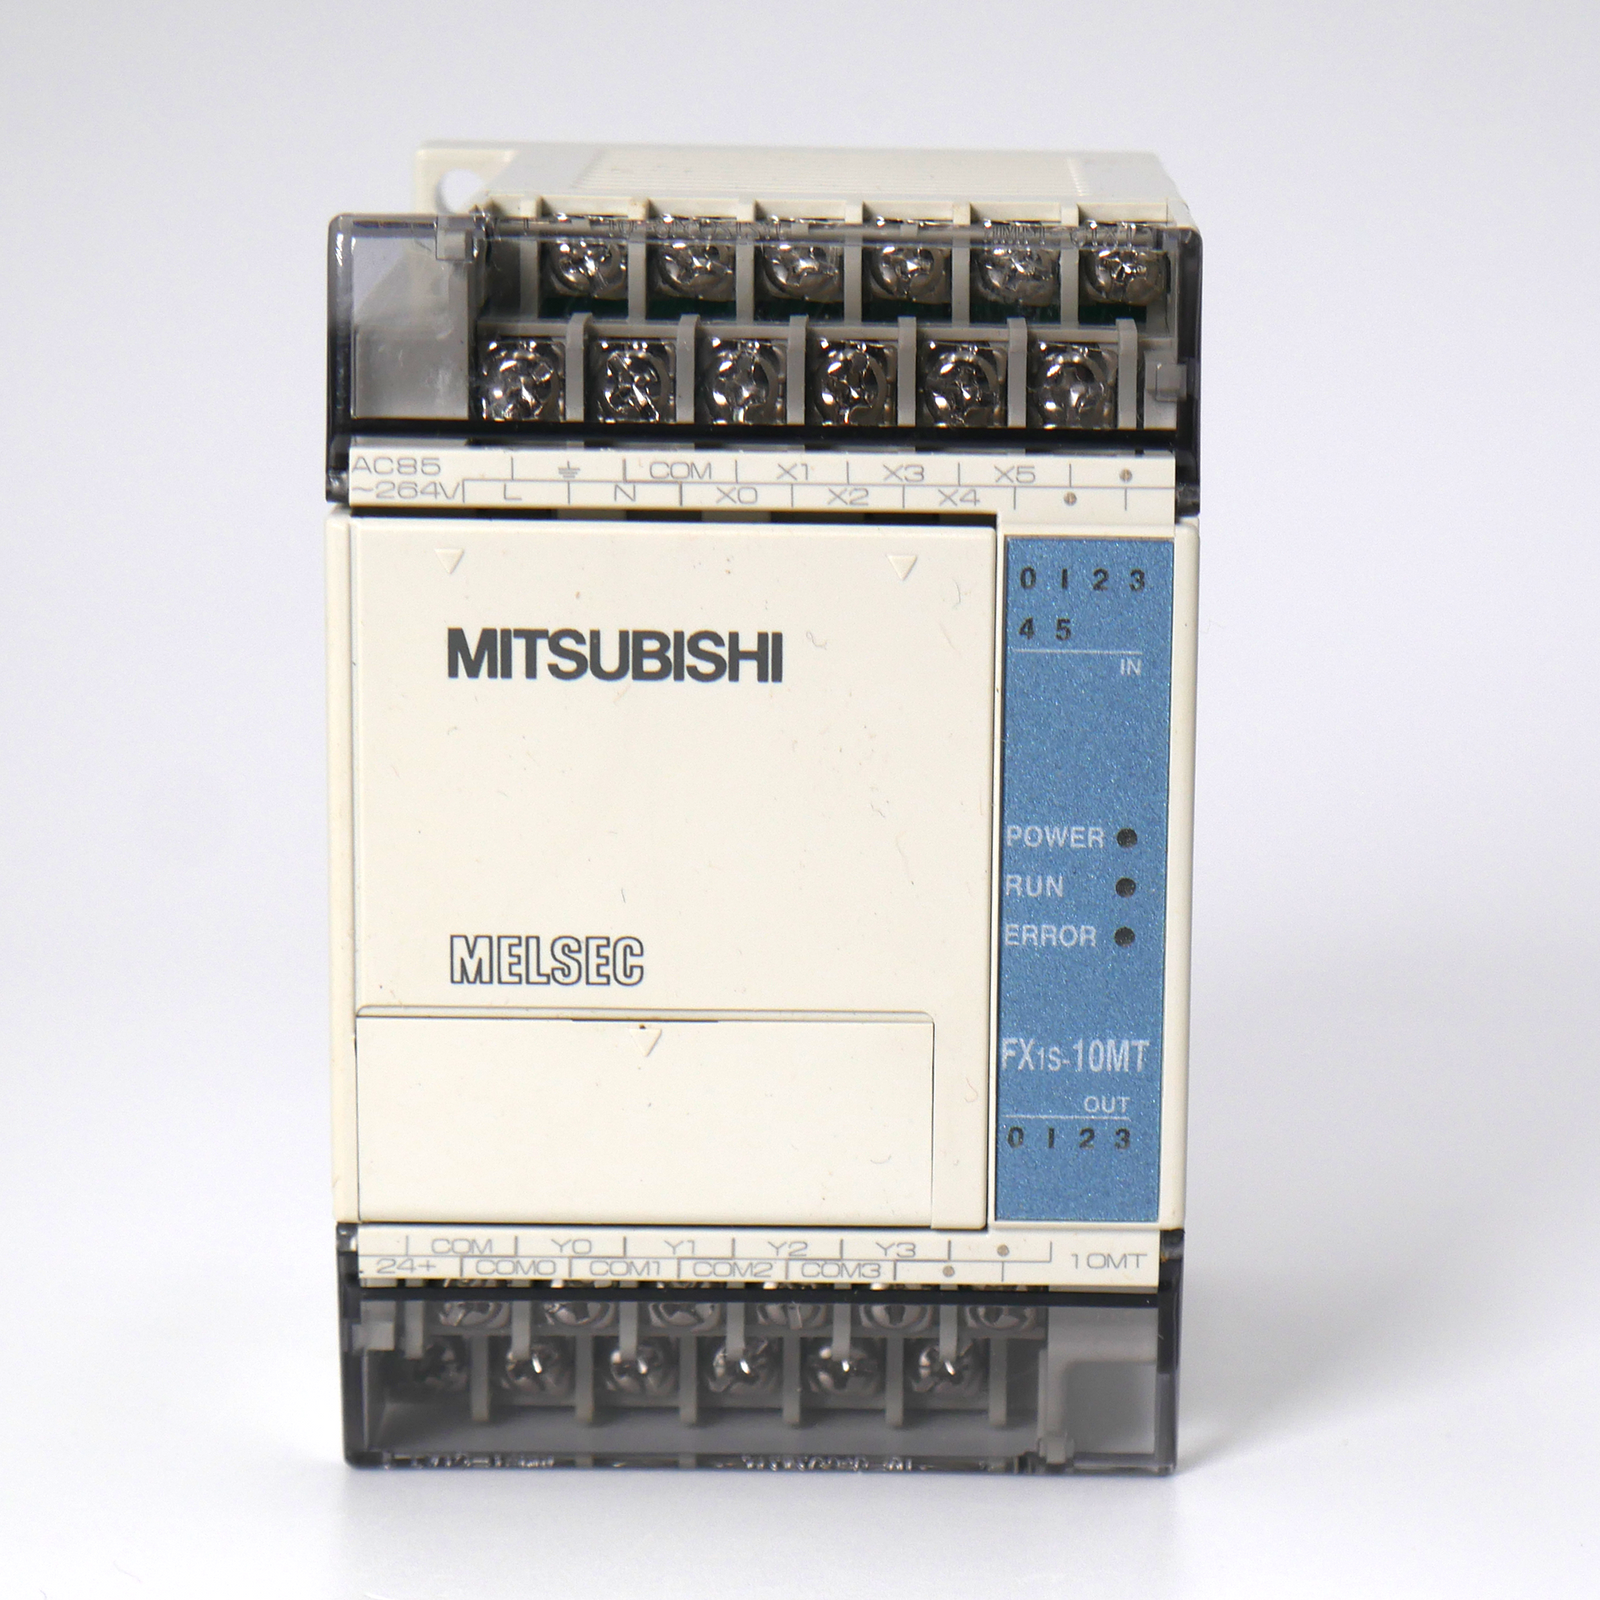 Mitsubishi programable logic controller